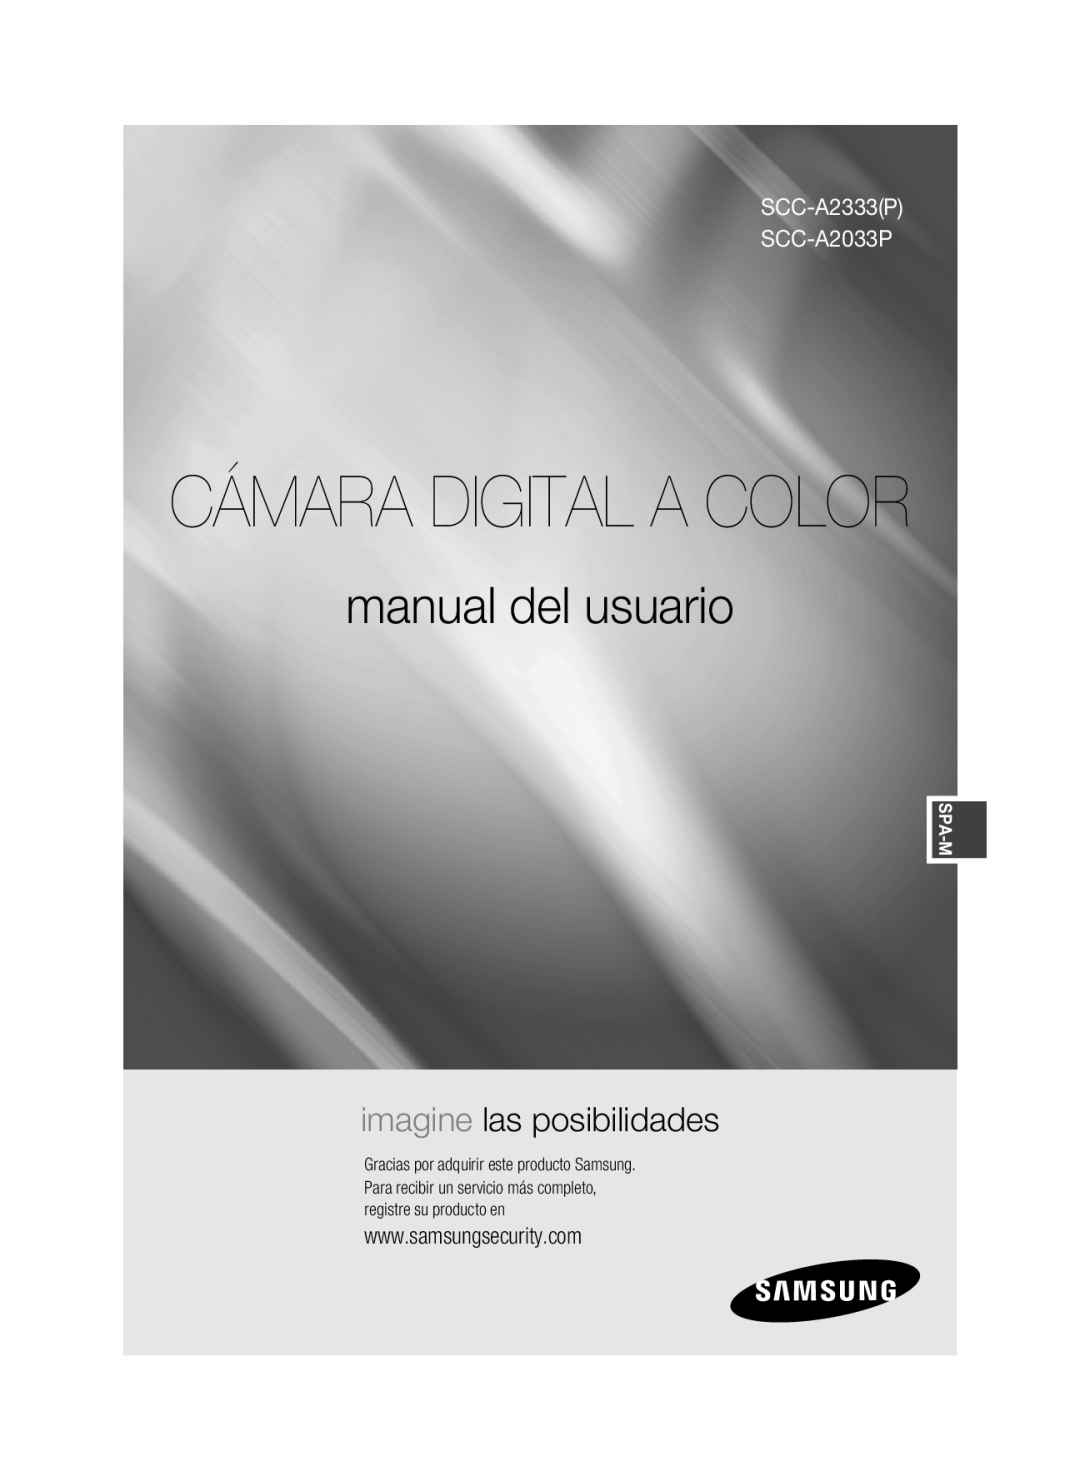 Samsung Cámara Digital A Color, manual del usuario, imagine las posibilidades, SCC-A2333P SCC-A2033P, Spa-M 